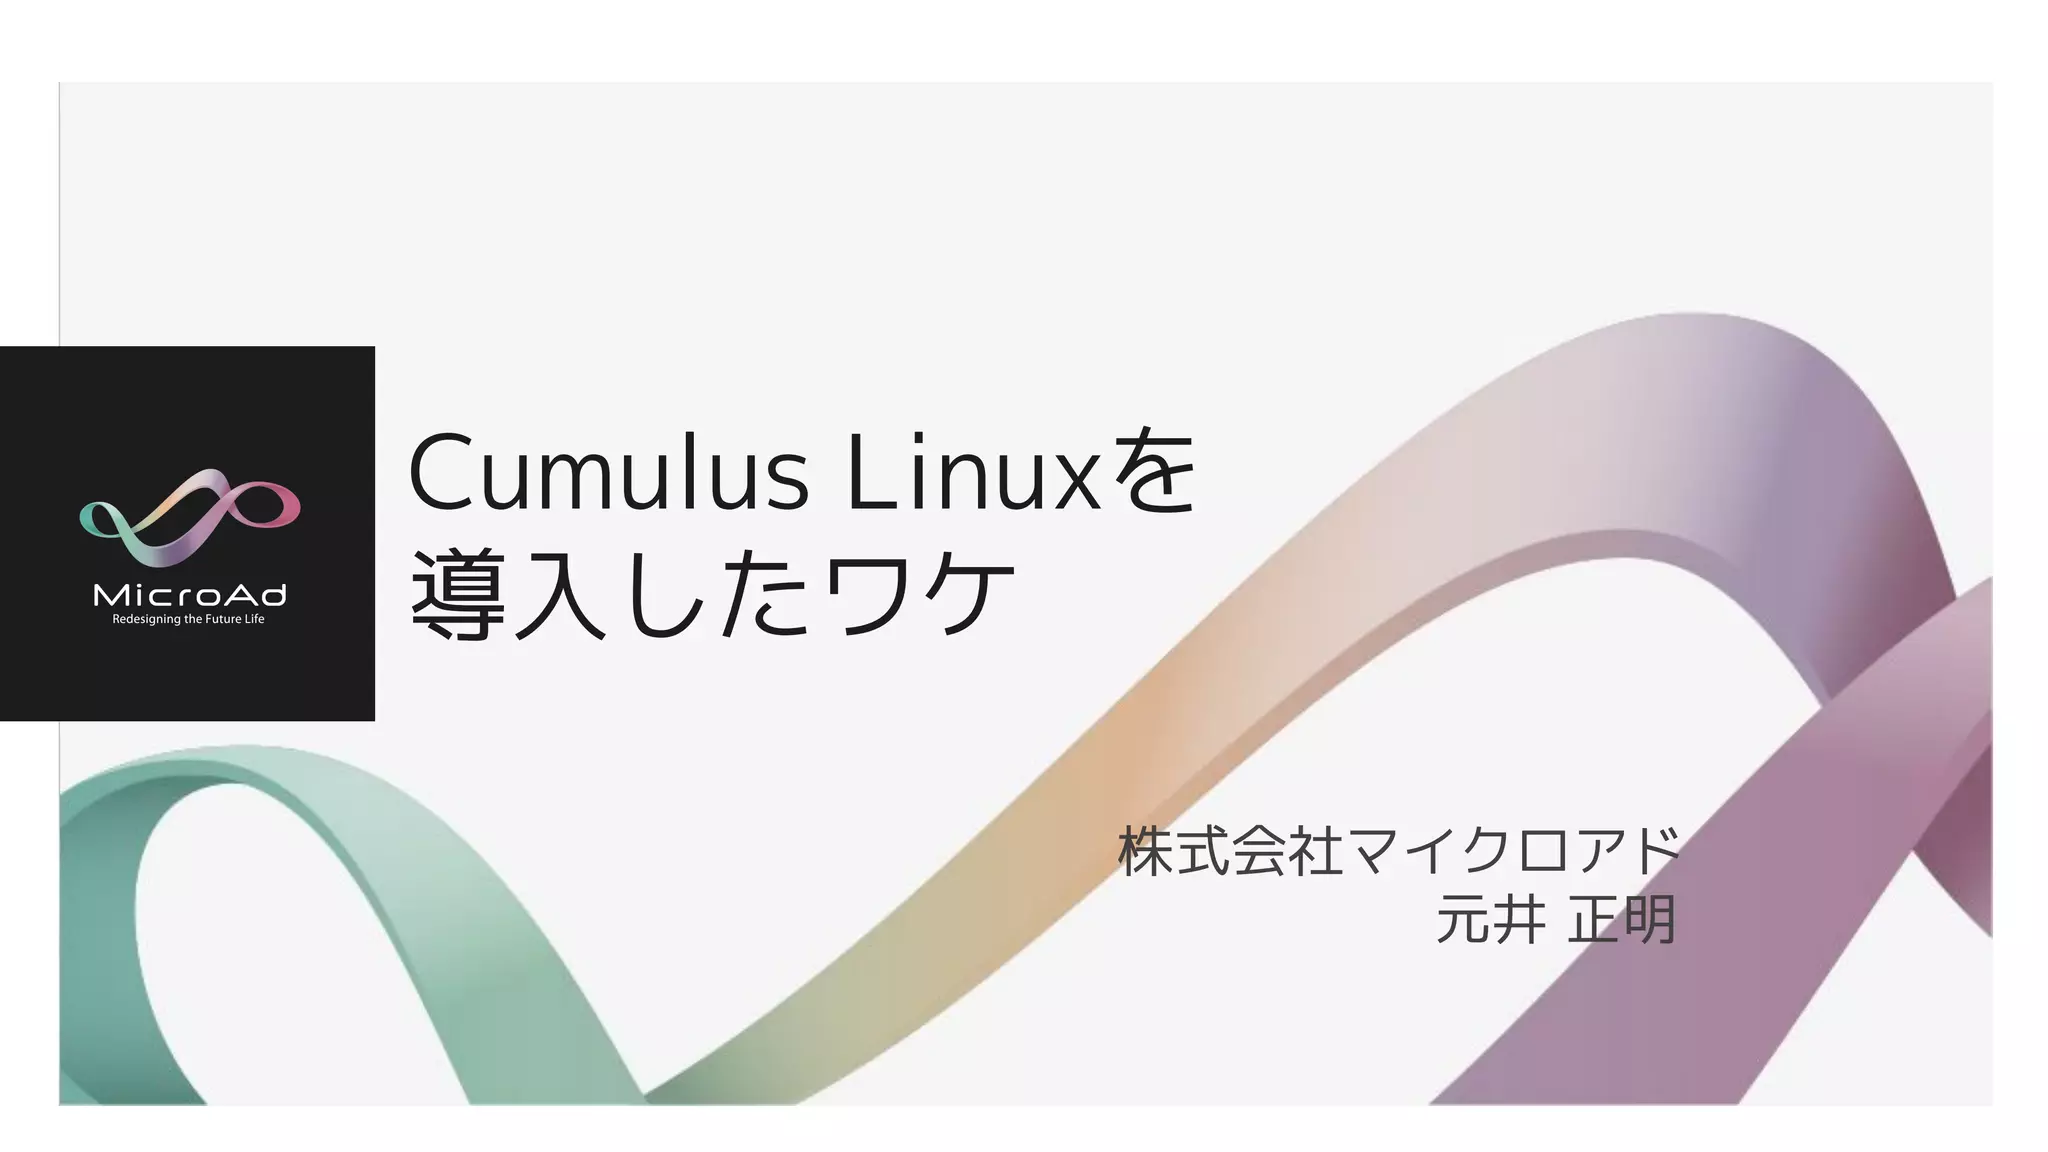 Cumulus Linuxを導入したワケ